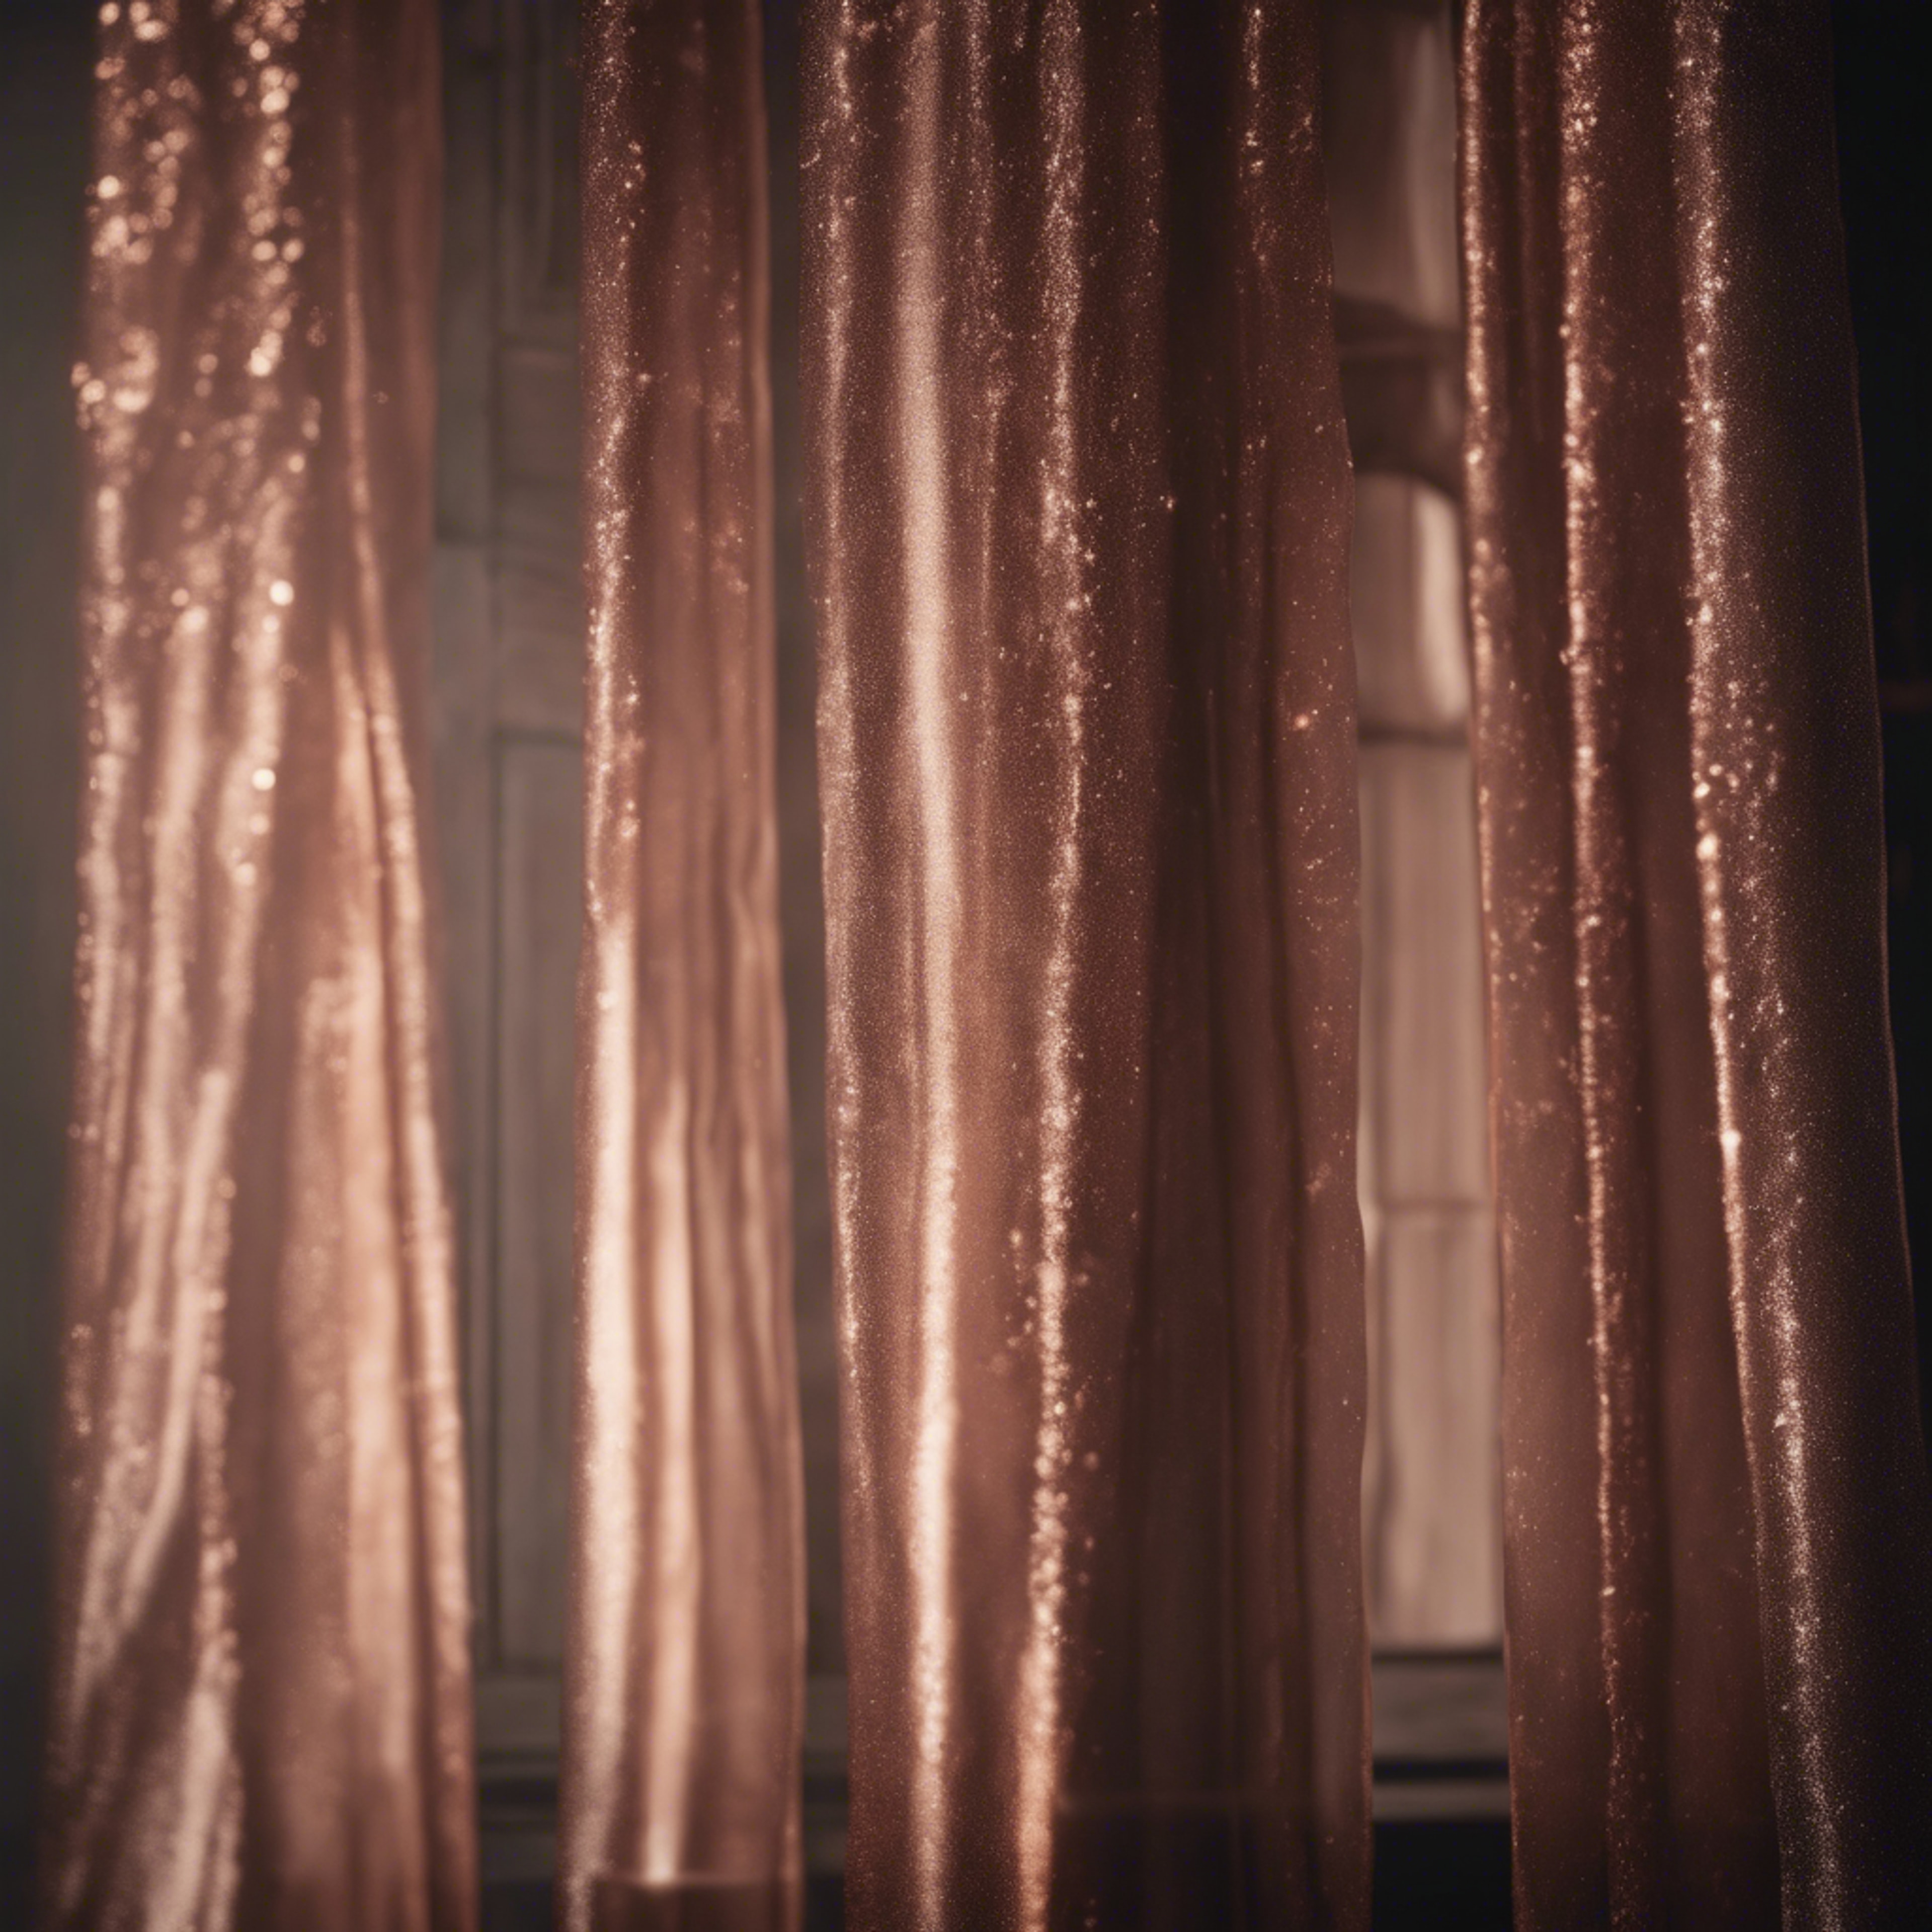 A lush rose gold curtain falling gracefully against a dark, wooden floor.壁紙[2a1d745c8031439ca98c]